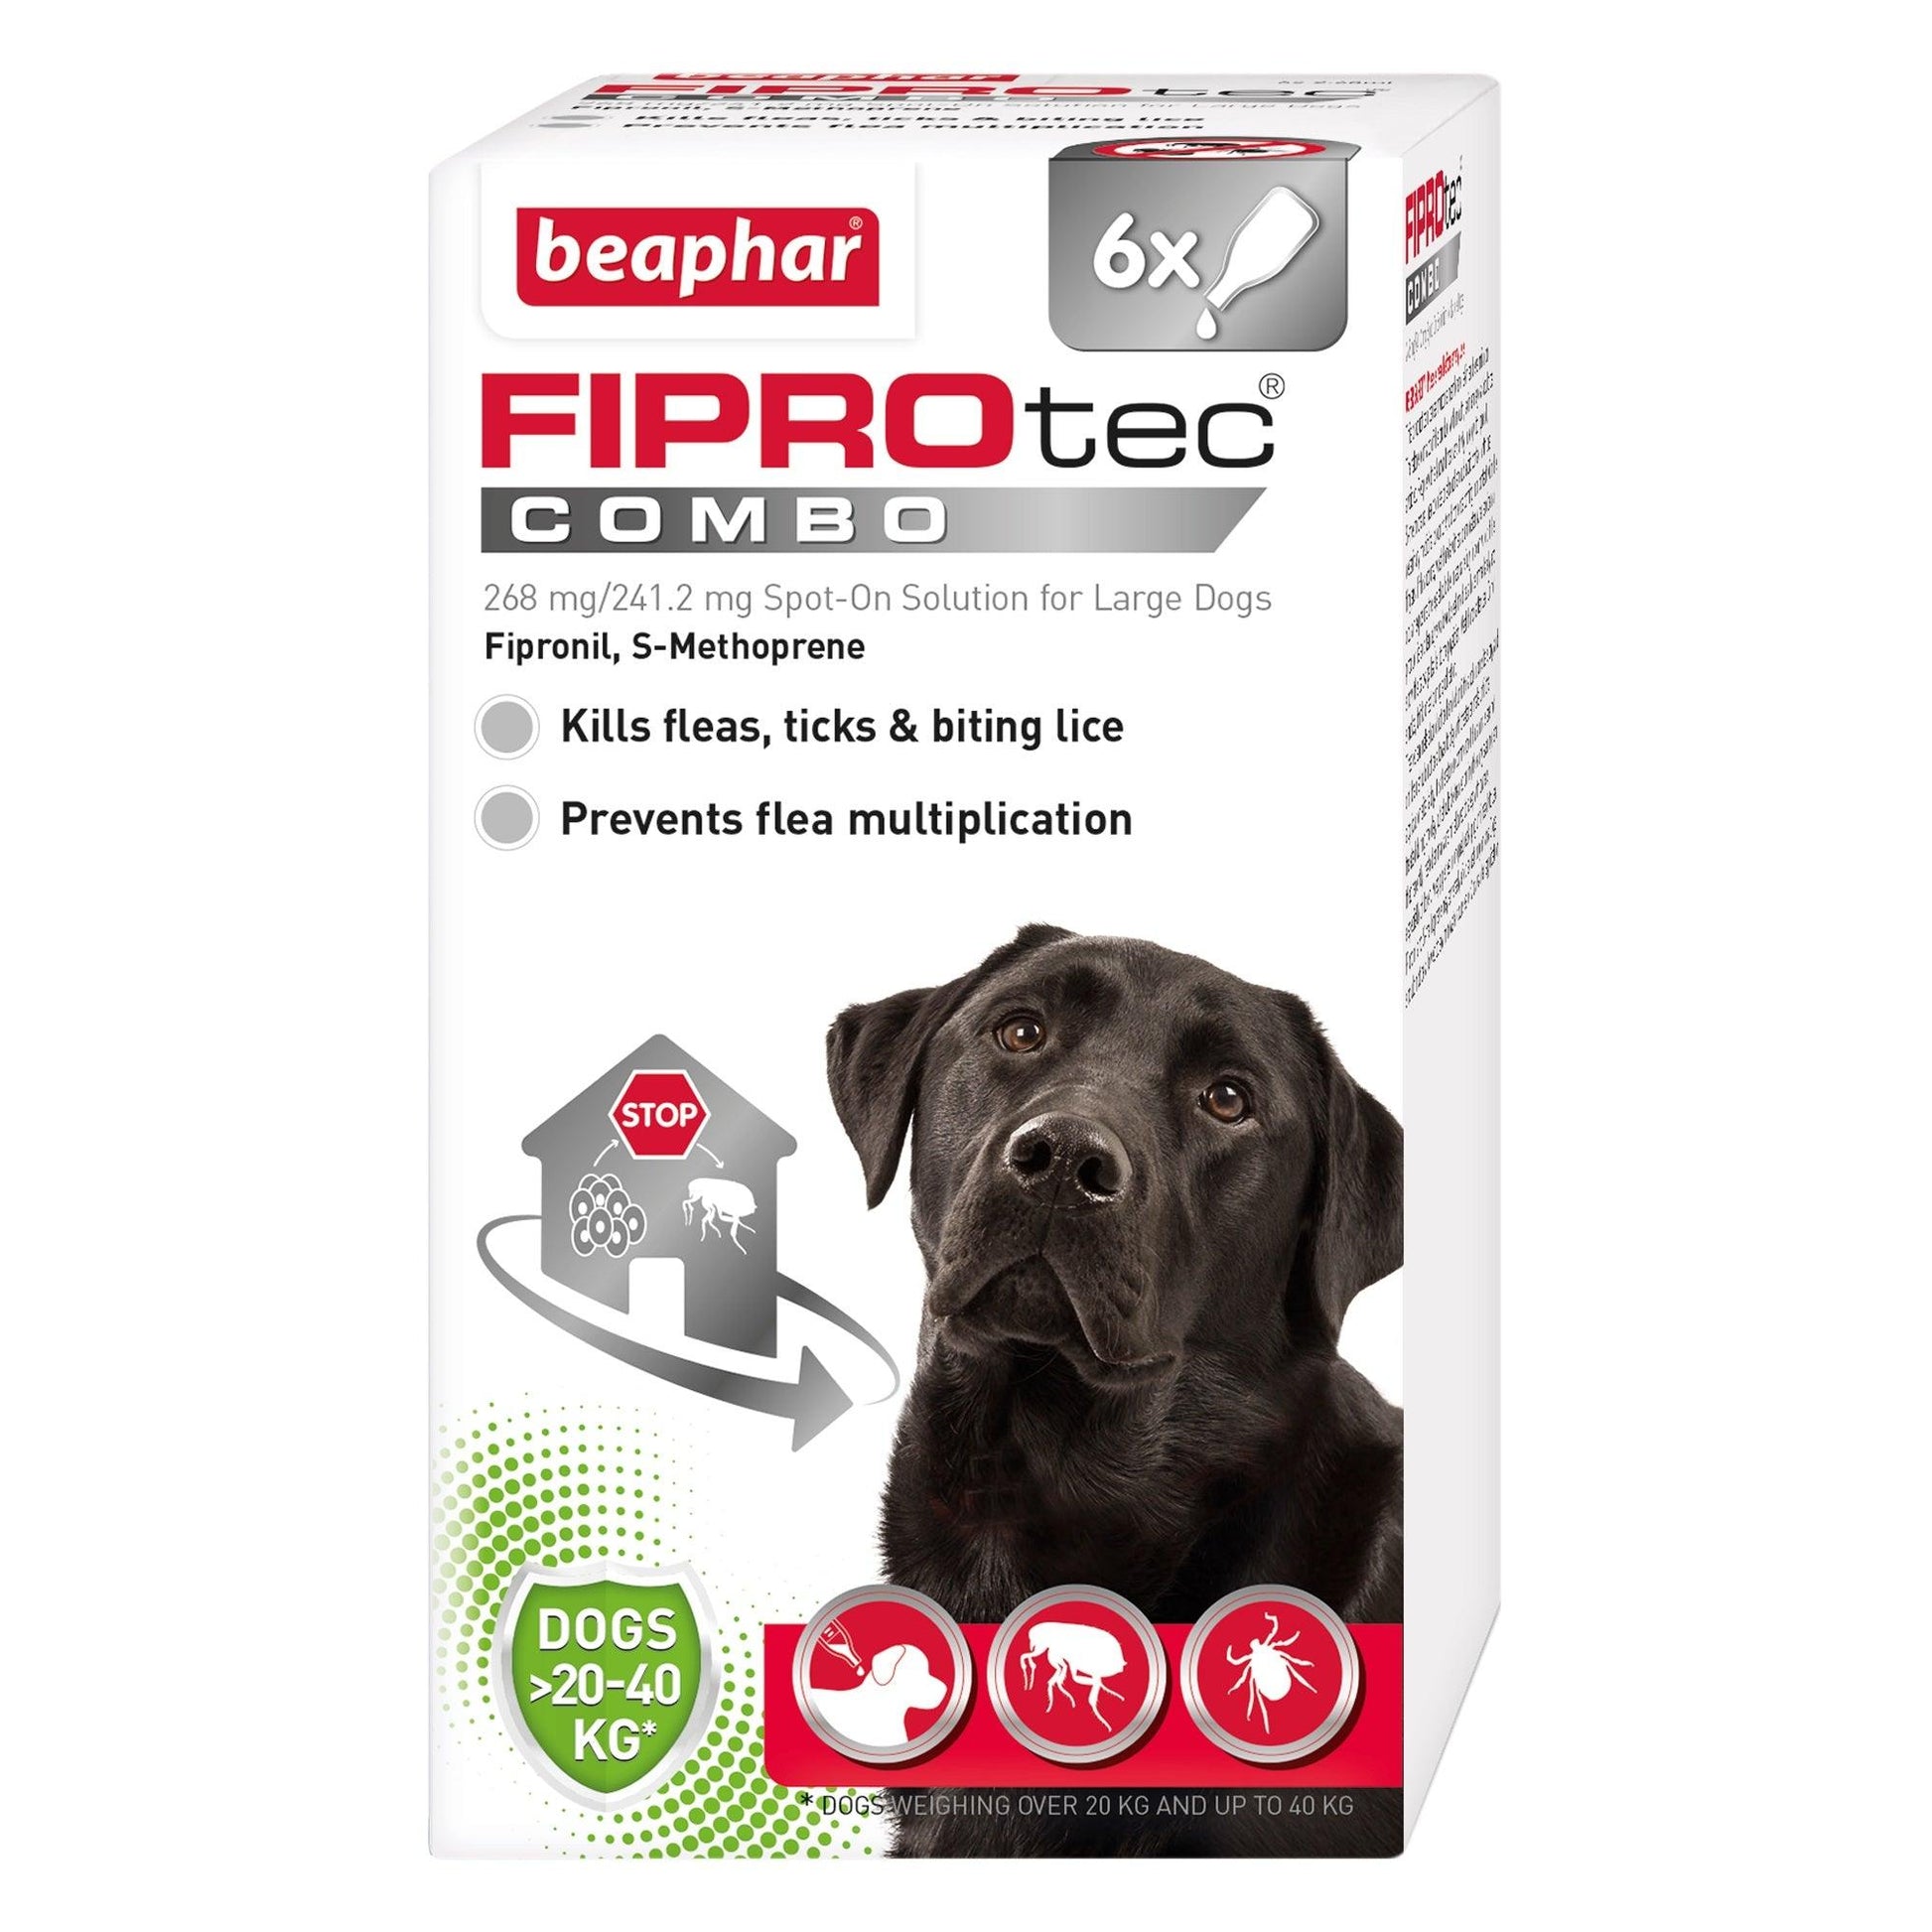 Beaphar FIPROtec COMBO Lrg Dog 6 pip x4 - North East Pet Shop Beaphar